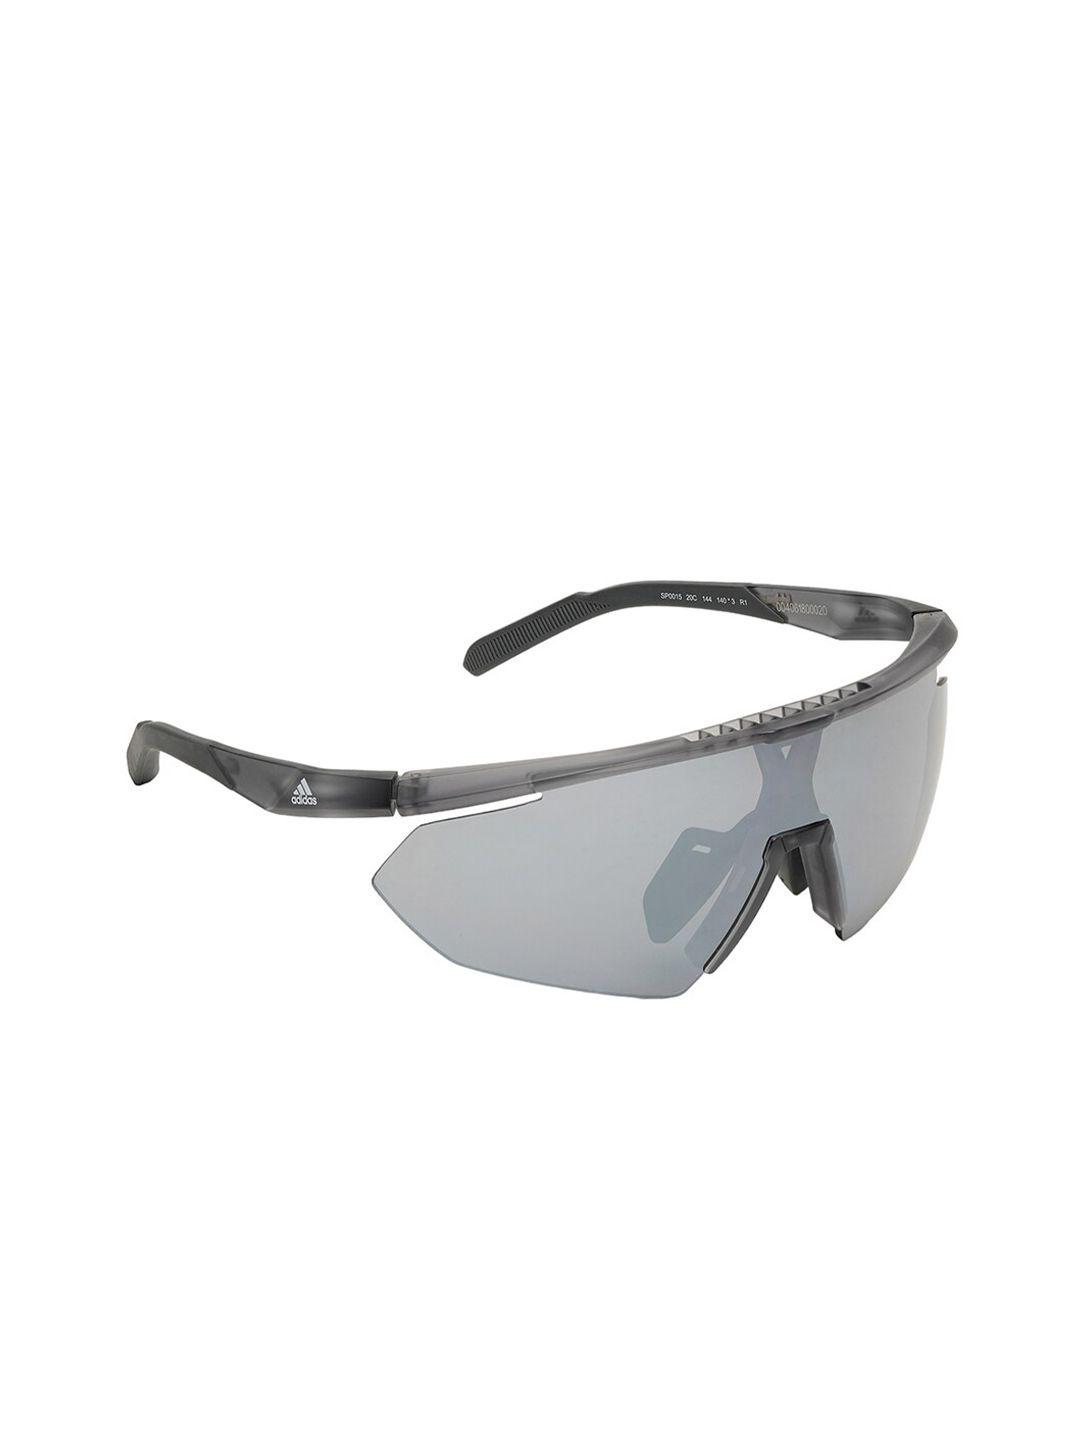 adidas-men-uv-protected-sports-sunglasses